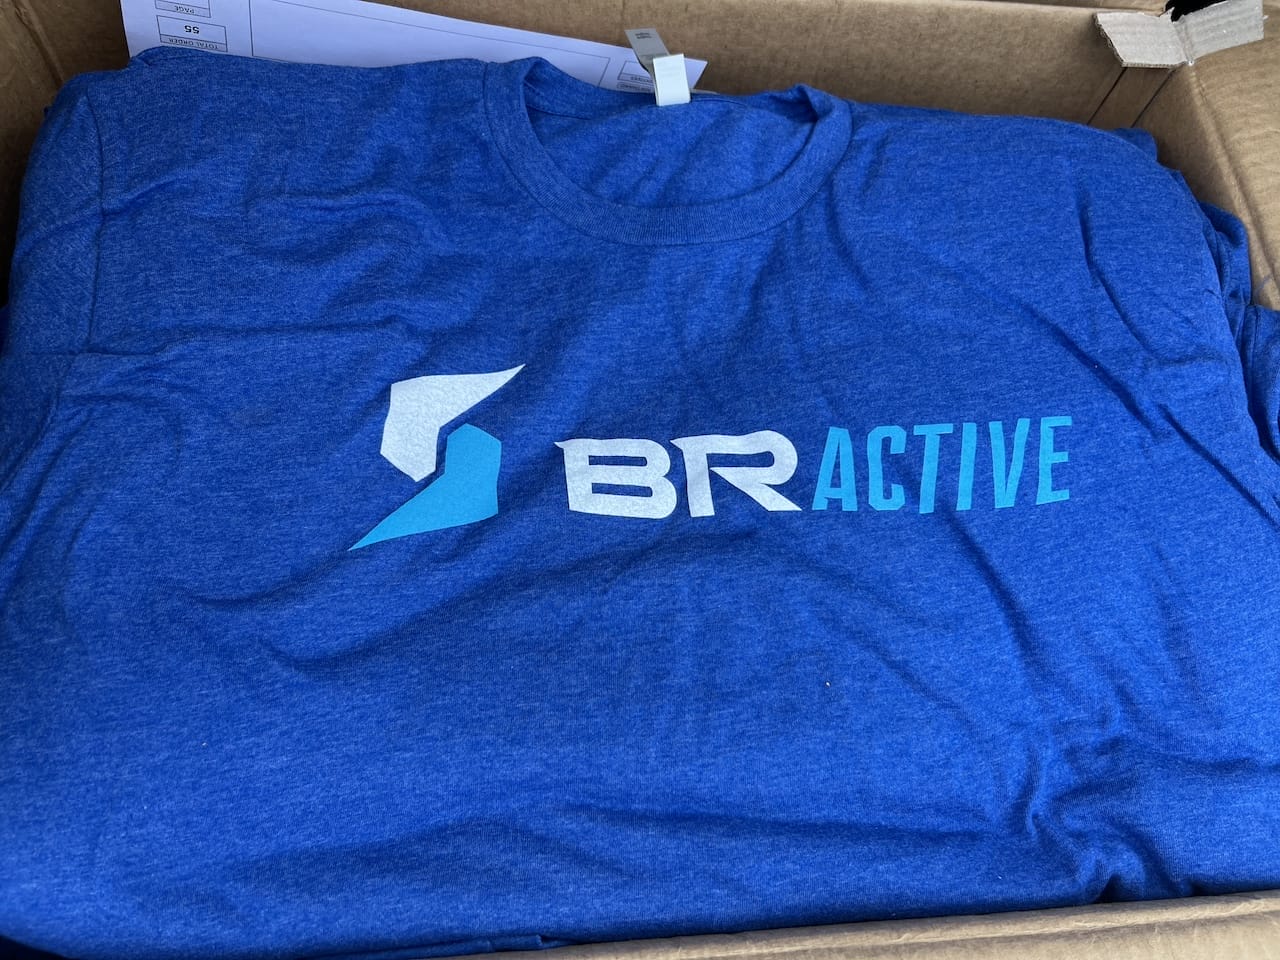 BR Active shirt blue